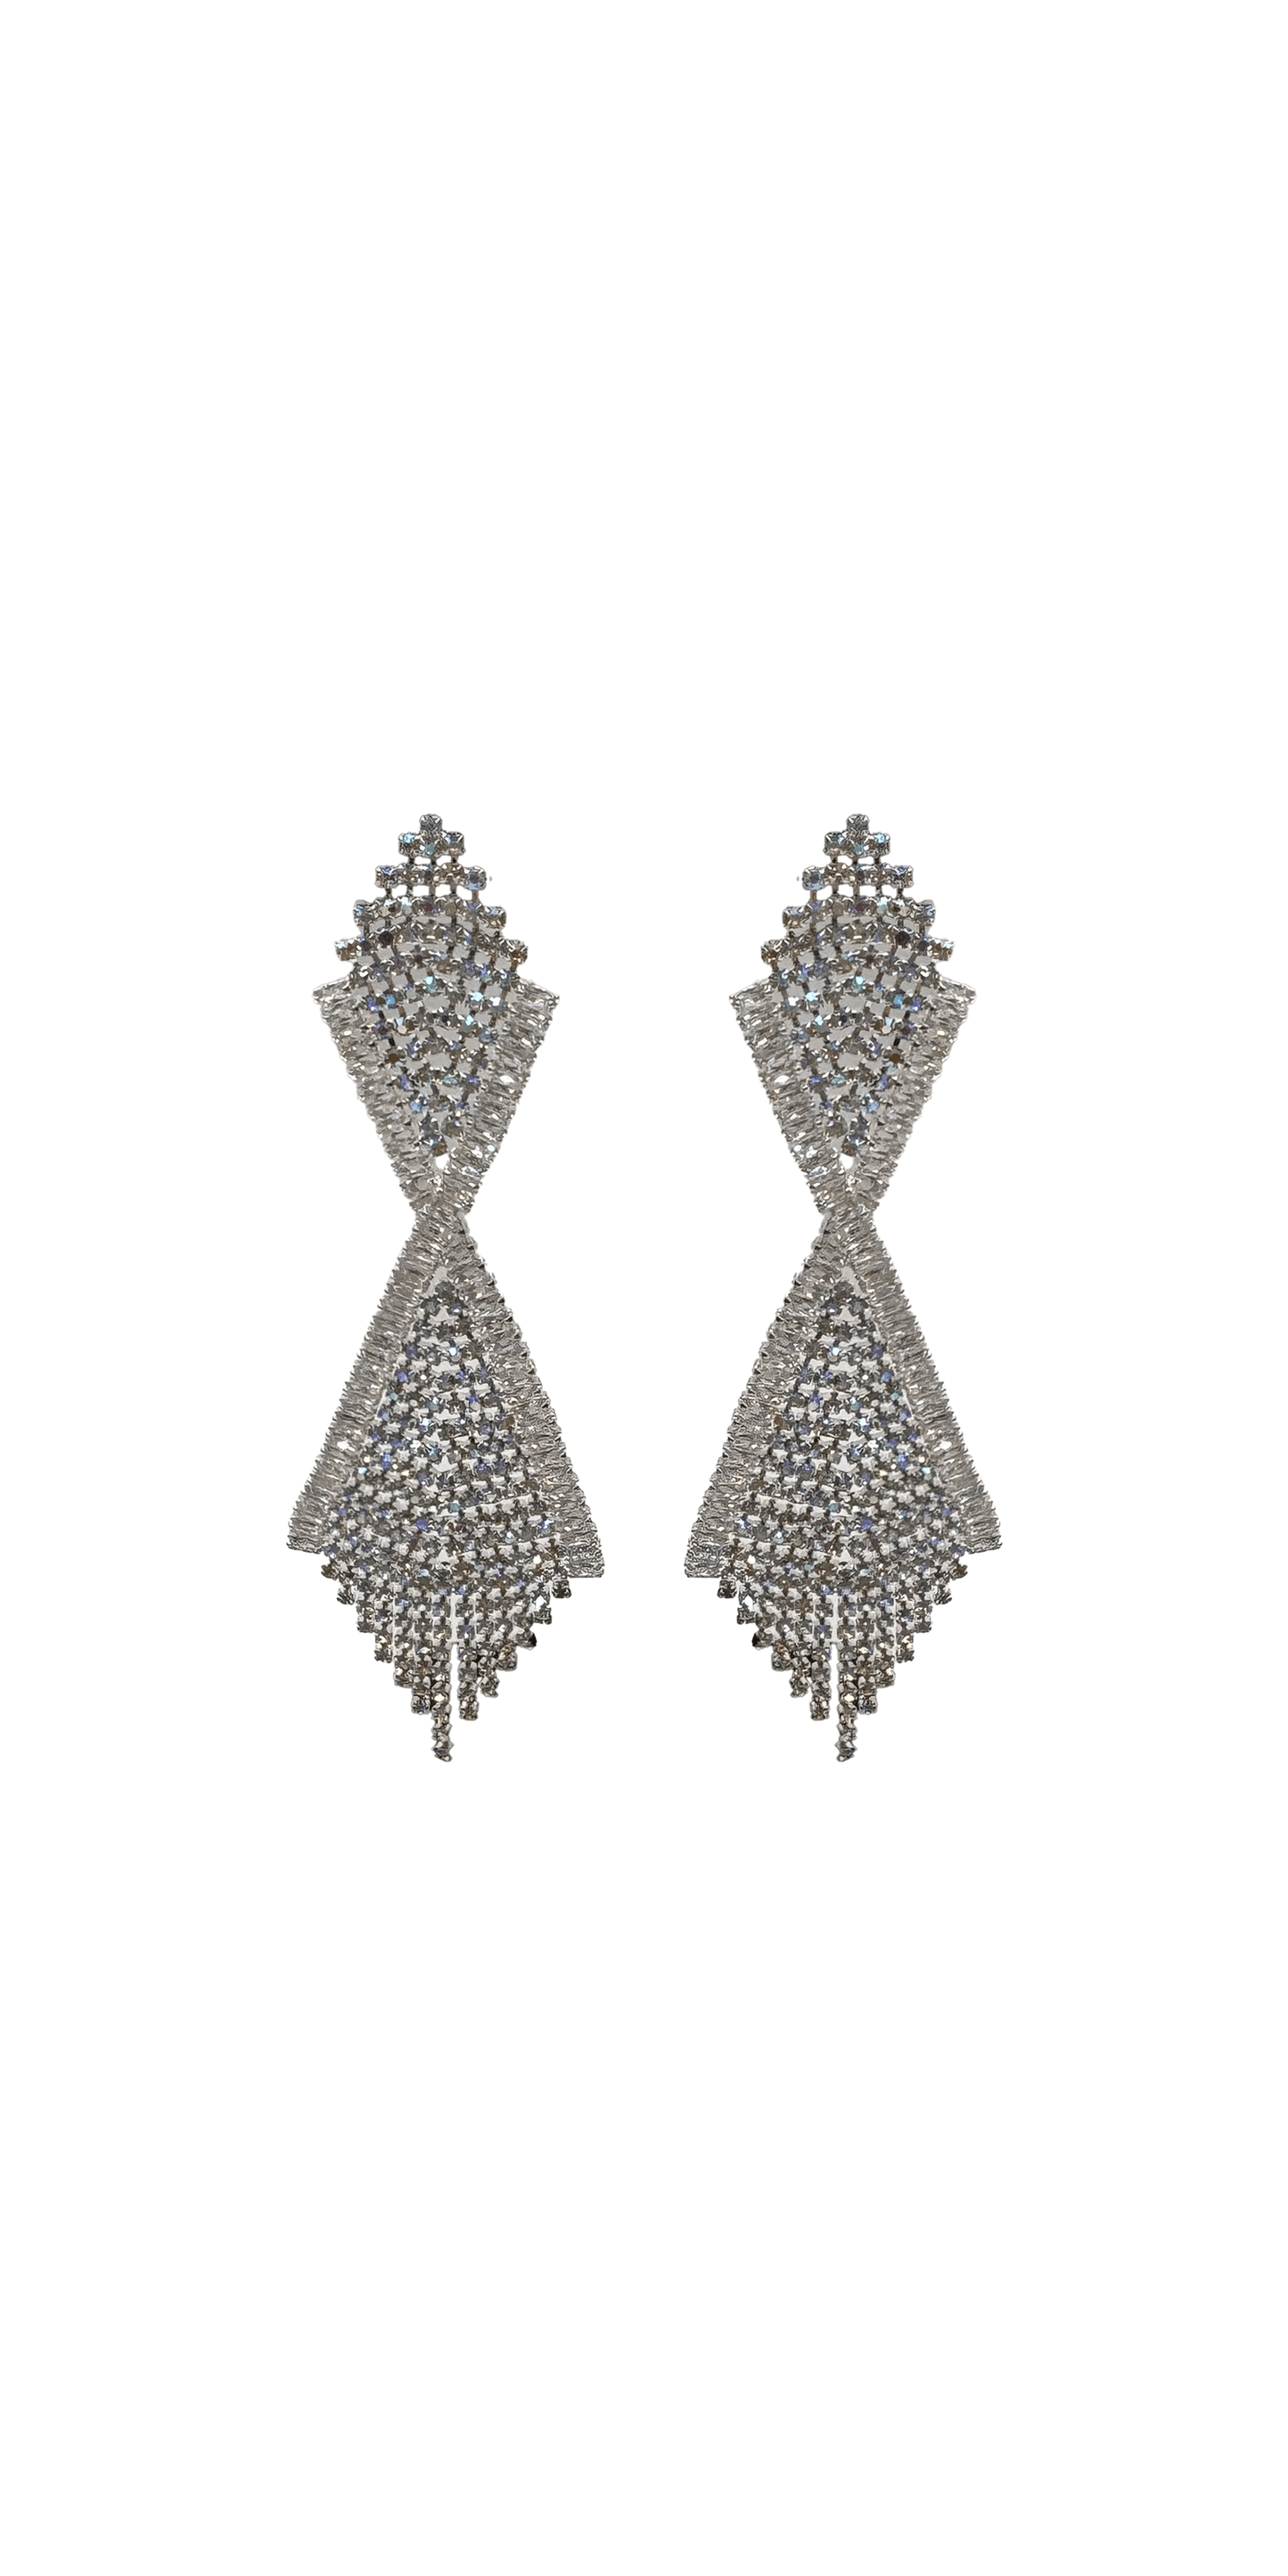 Camille La Vie Iridescent Double Diamond Rhinestone Duster Earrings OS / silver